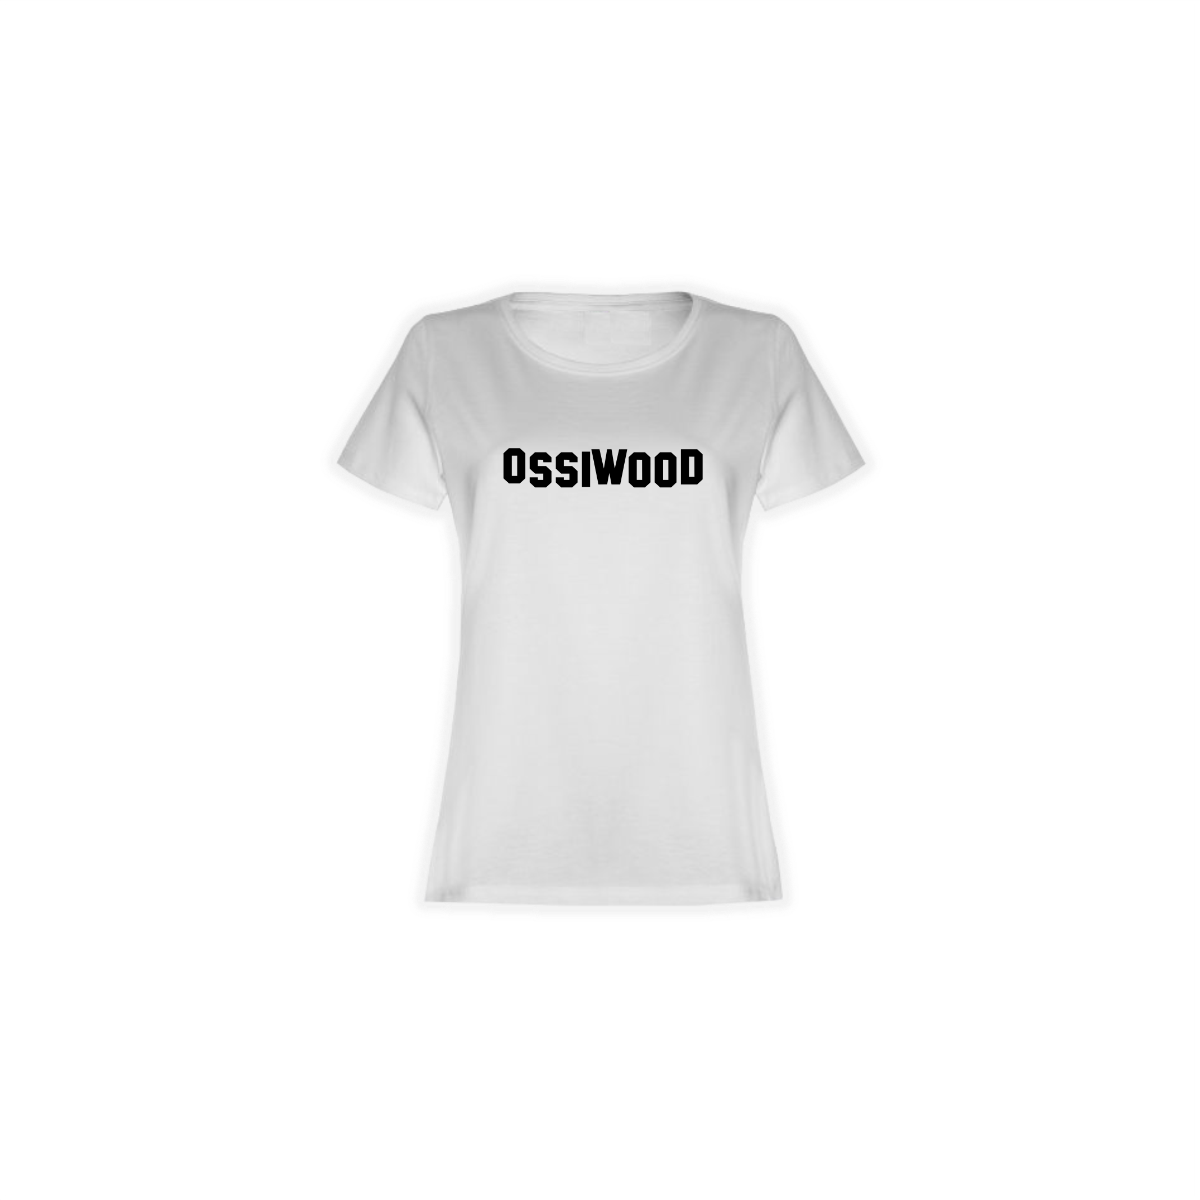 Girly-Shirt "OSSIWOOD" weiß